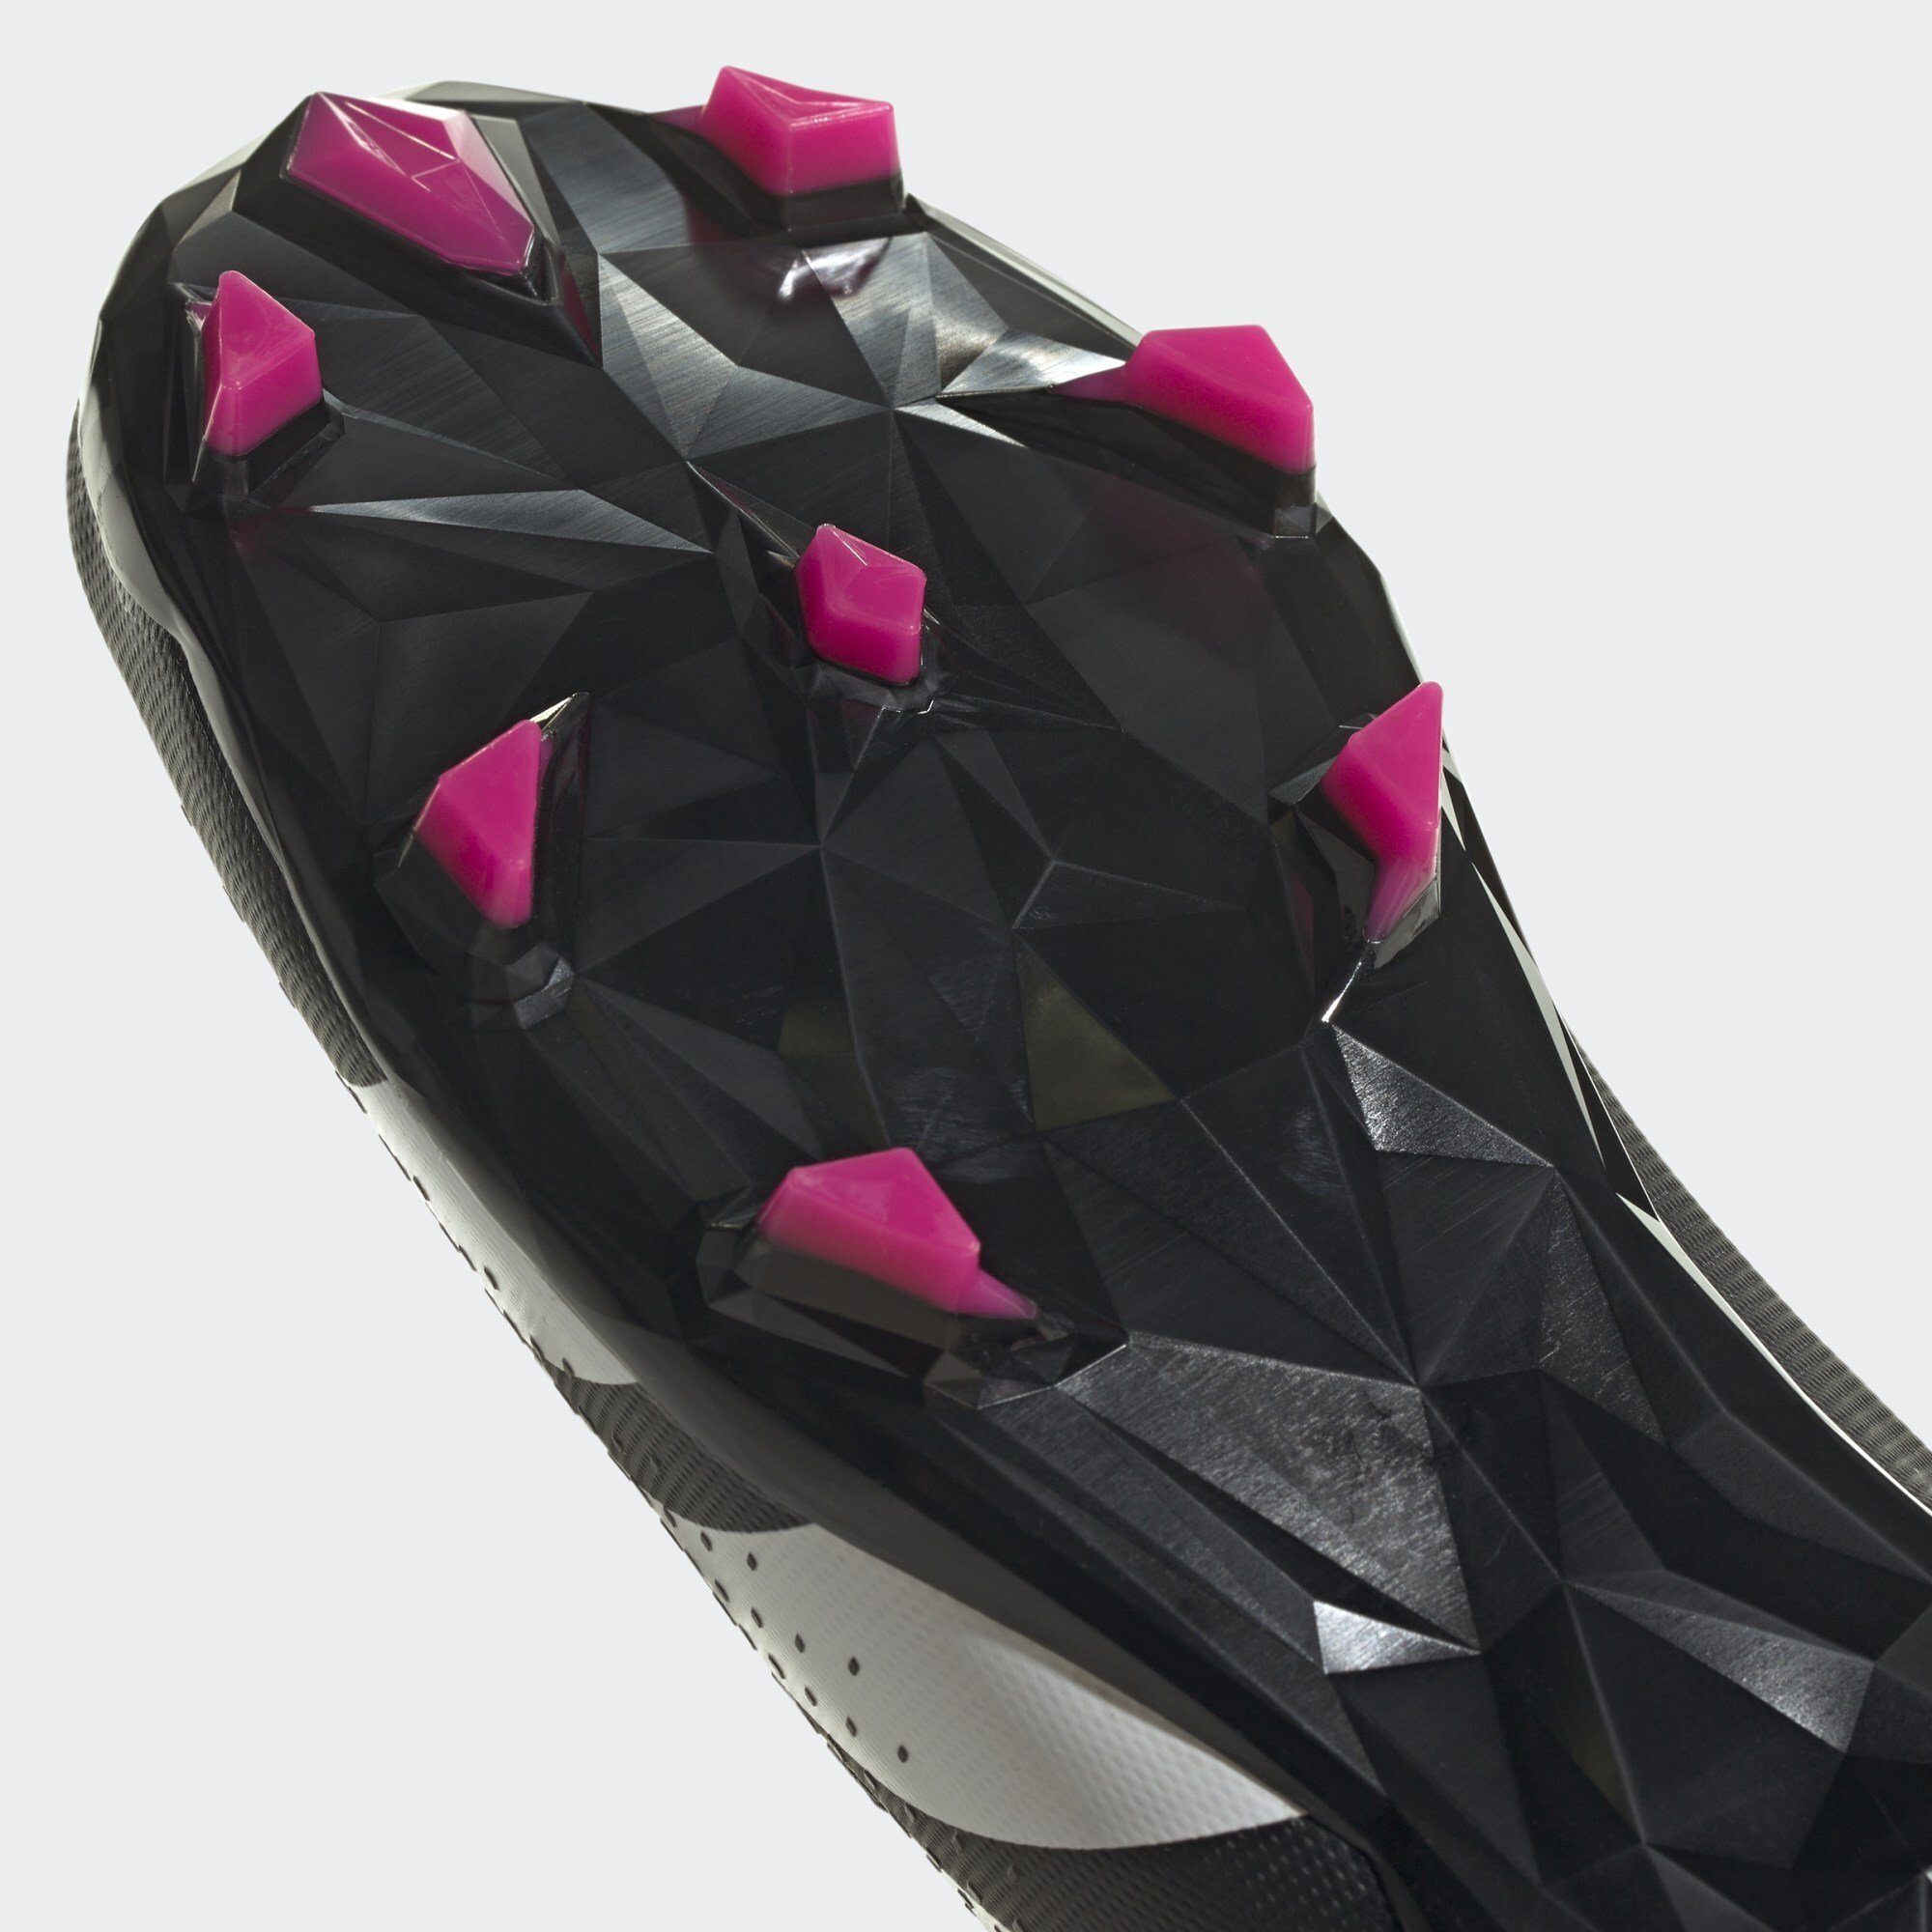 Fußballschuh adidas Core FG Shock / Cloud FUSSBALLSCHUH Performance / ACCURACY.3 2 Pink Black PREDATOR Team White